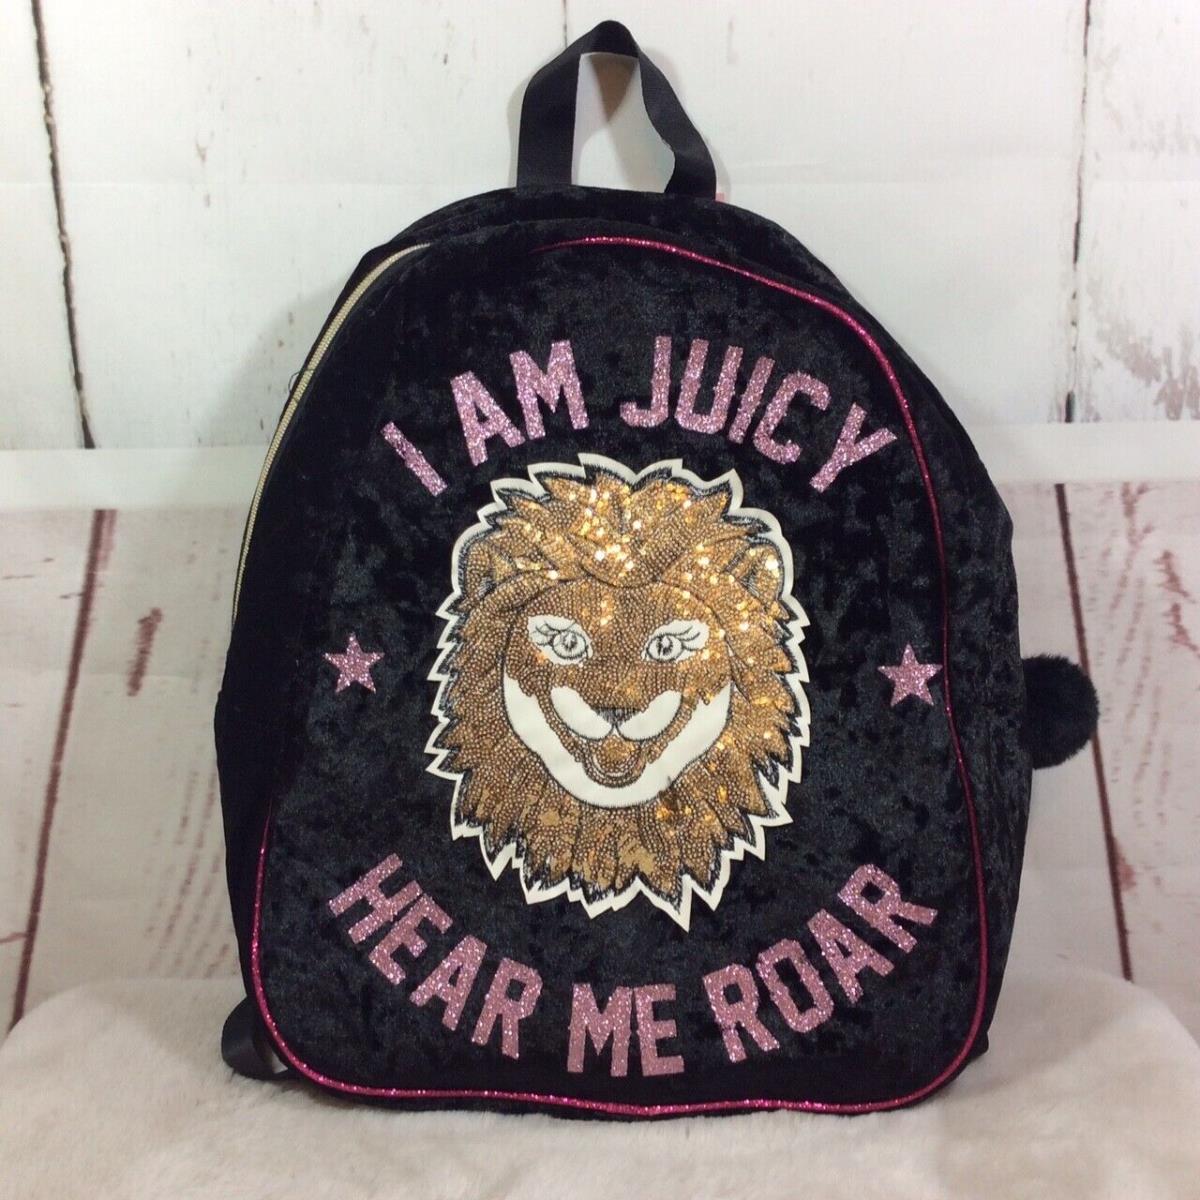 Juicy Couture Velour Backpack Bag I AM Juicy Hear ME Roar Black Pink Sequin Lion